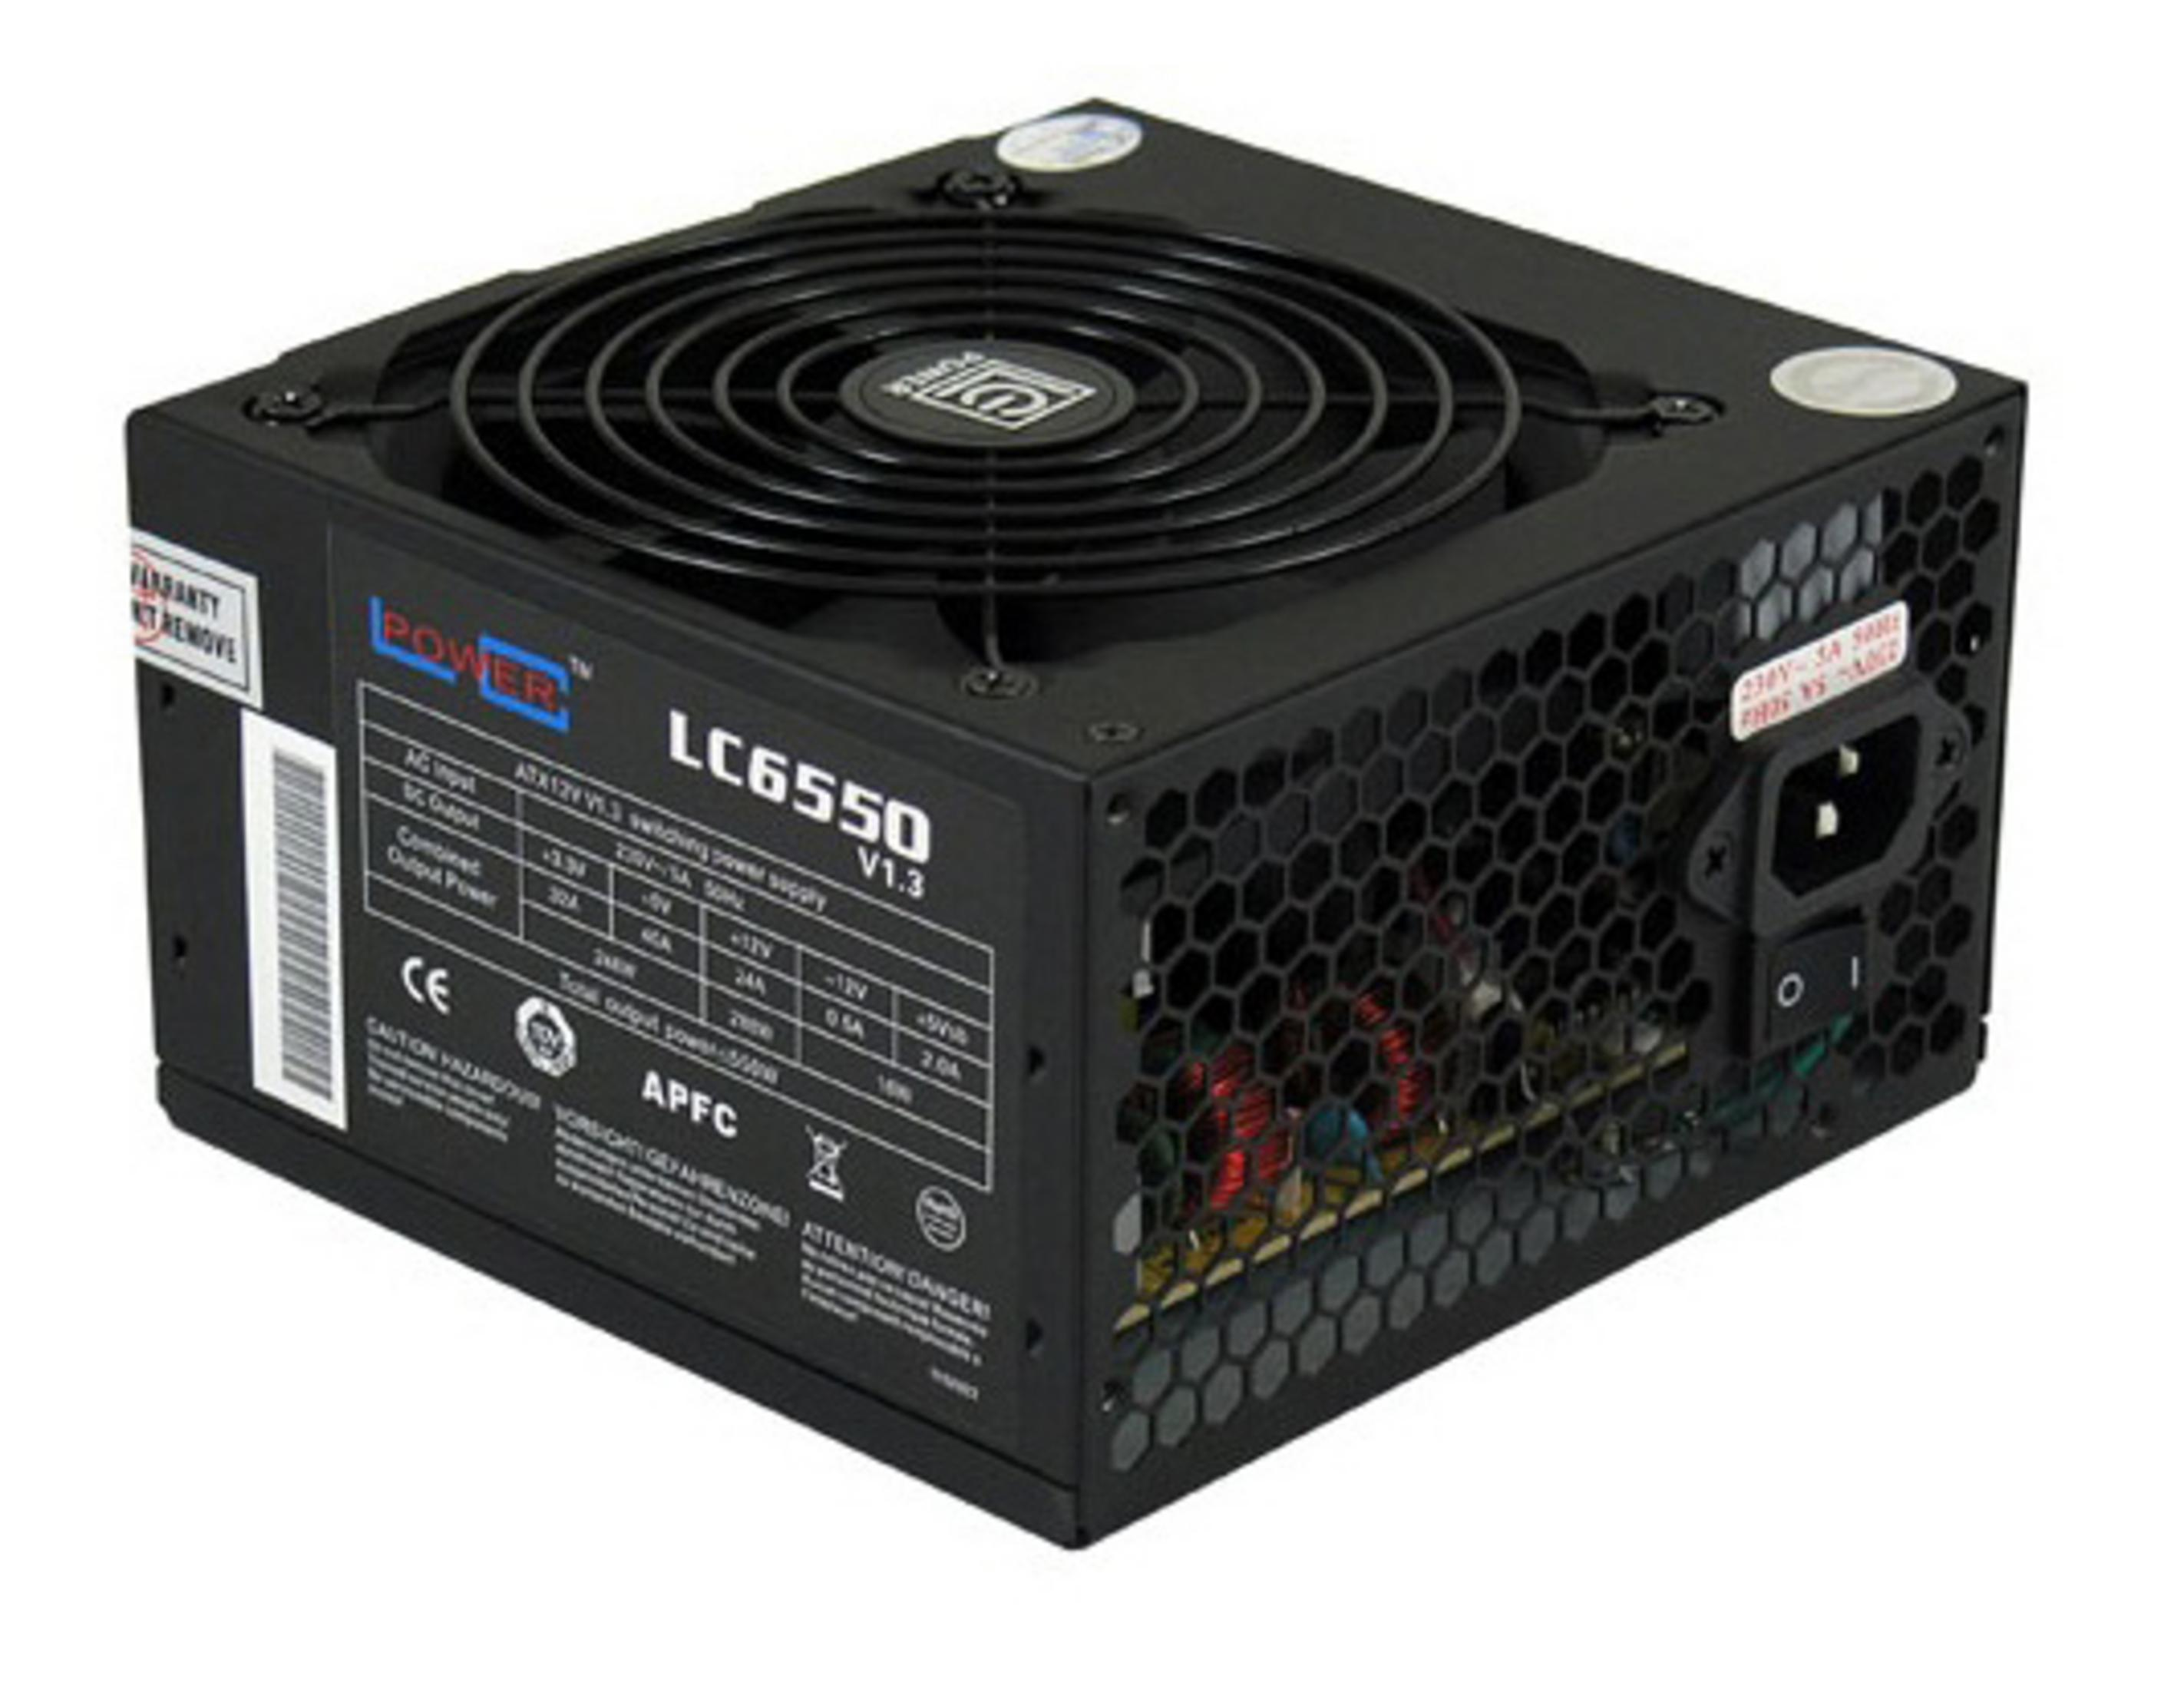 V2.3, POWER 550W, LC Netzteile LC-Power Watt LC6550 Super-Silent-Serie, 550 Strom 80+ ATX-Netzteil